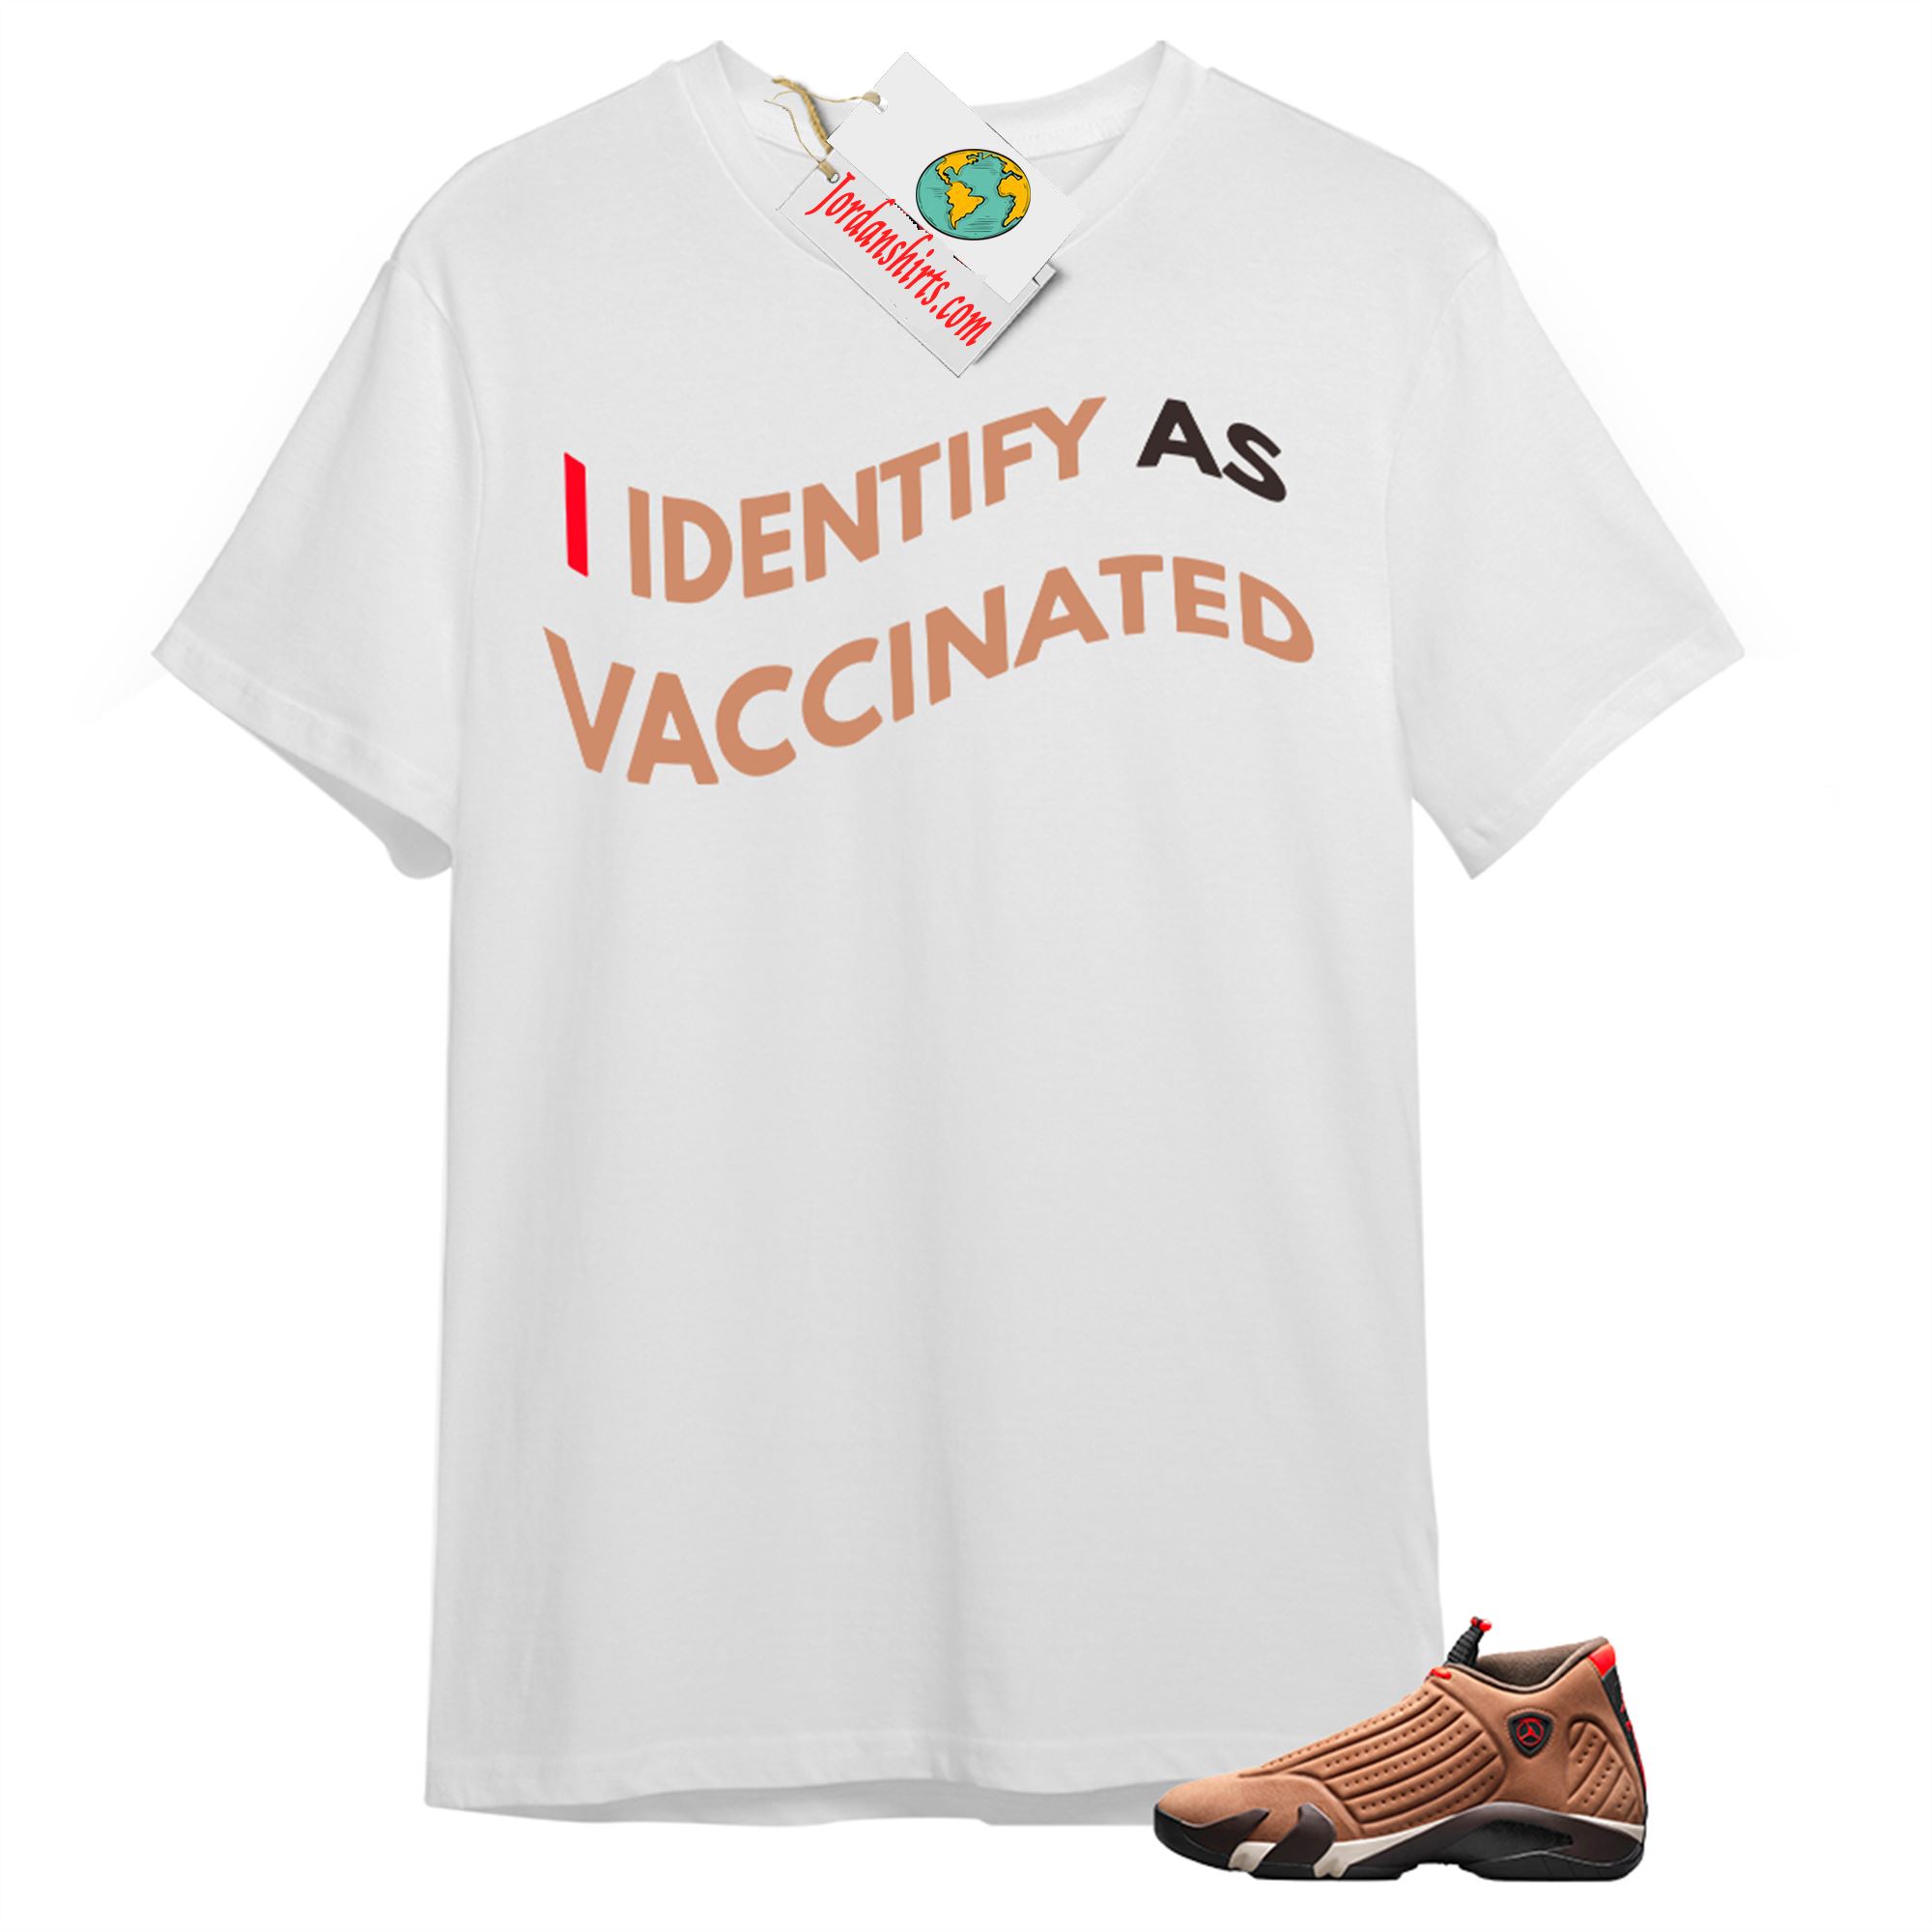 Jordan 14 Shirt, I Identify As Vaccinated White T-shirt Air Jordan 14 Winterized 14s Size Up To 5xl